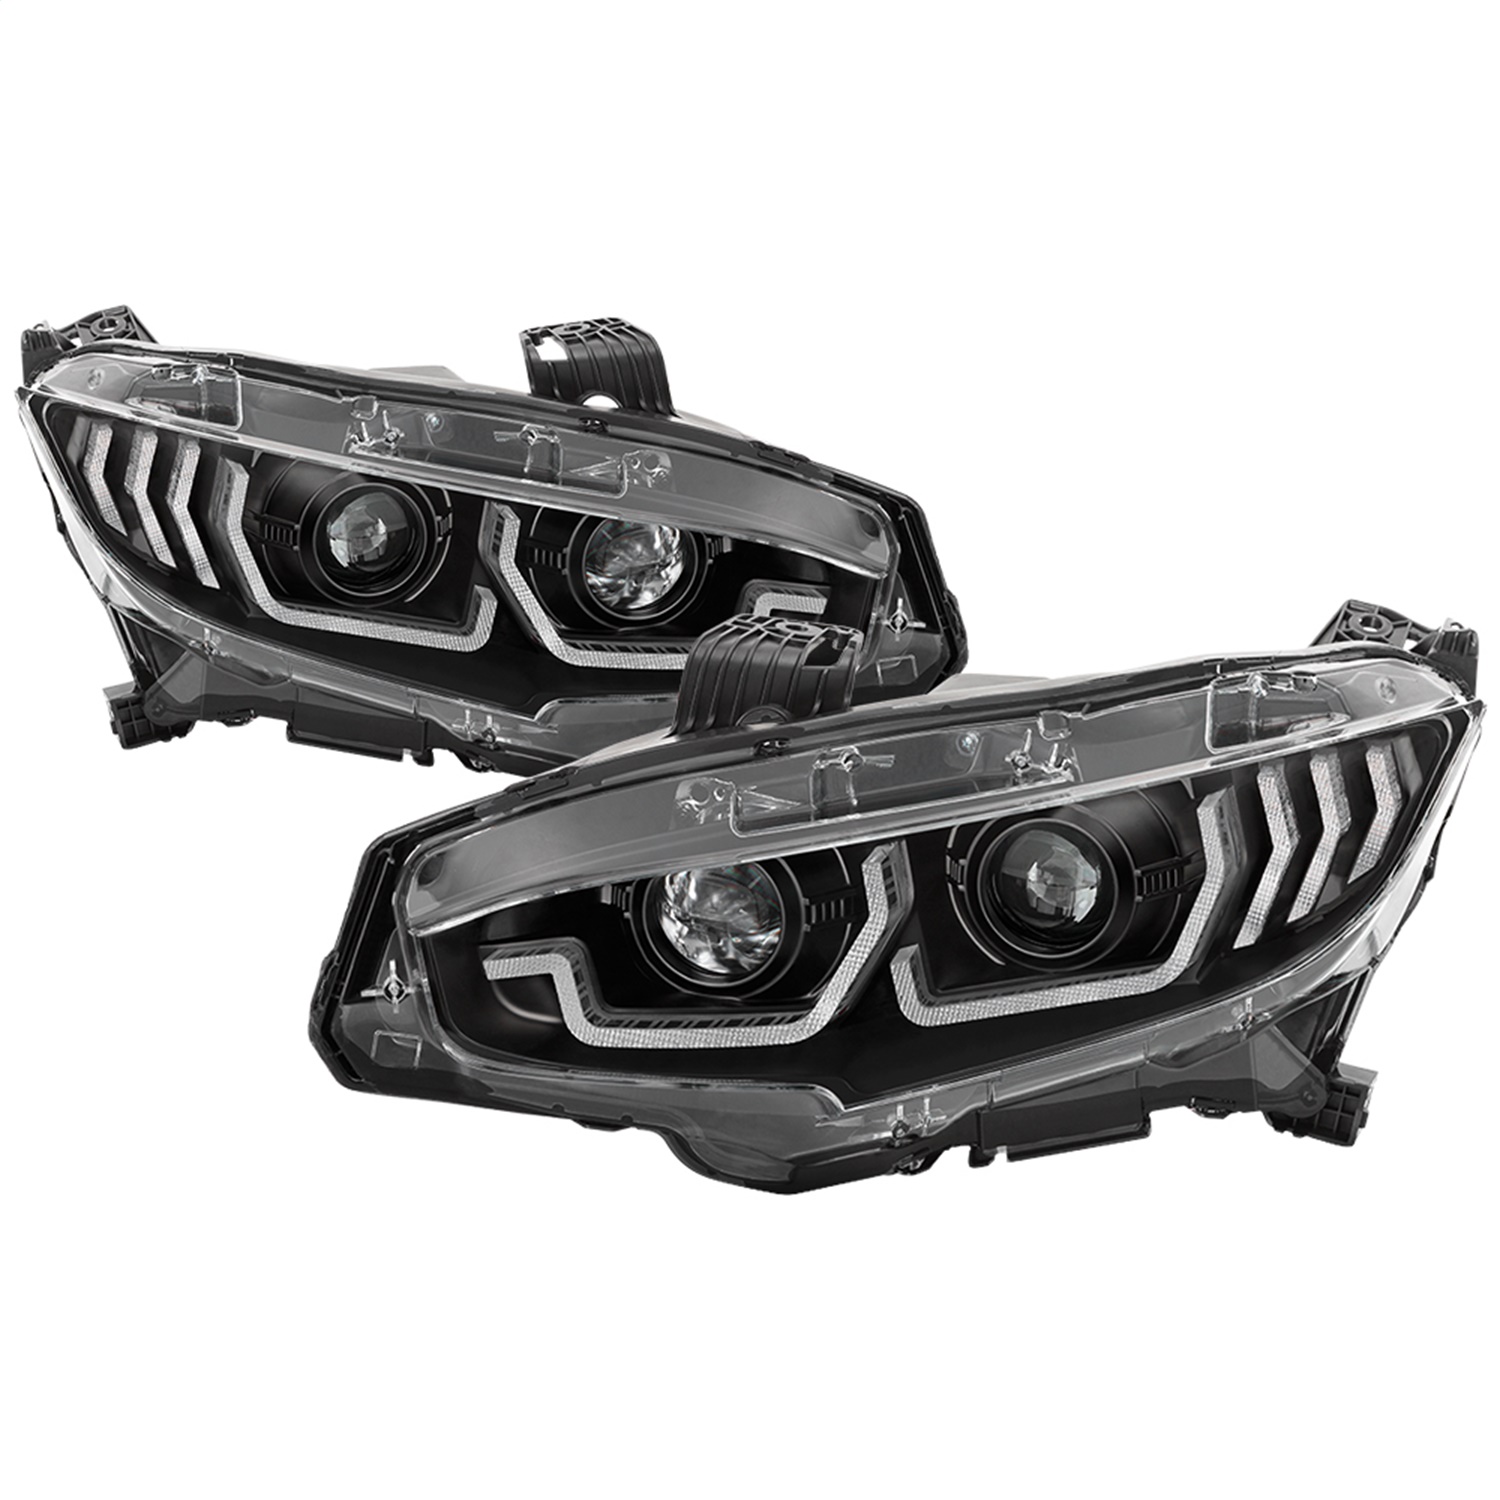 Spyder Auto 5086099 Projector Headlights Fits 17-20 Civic